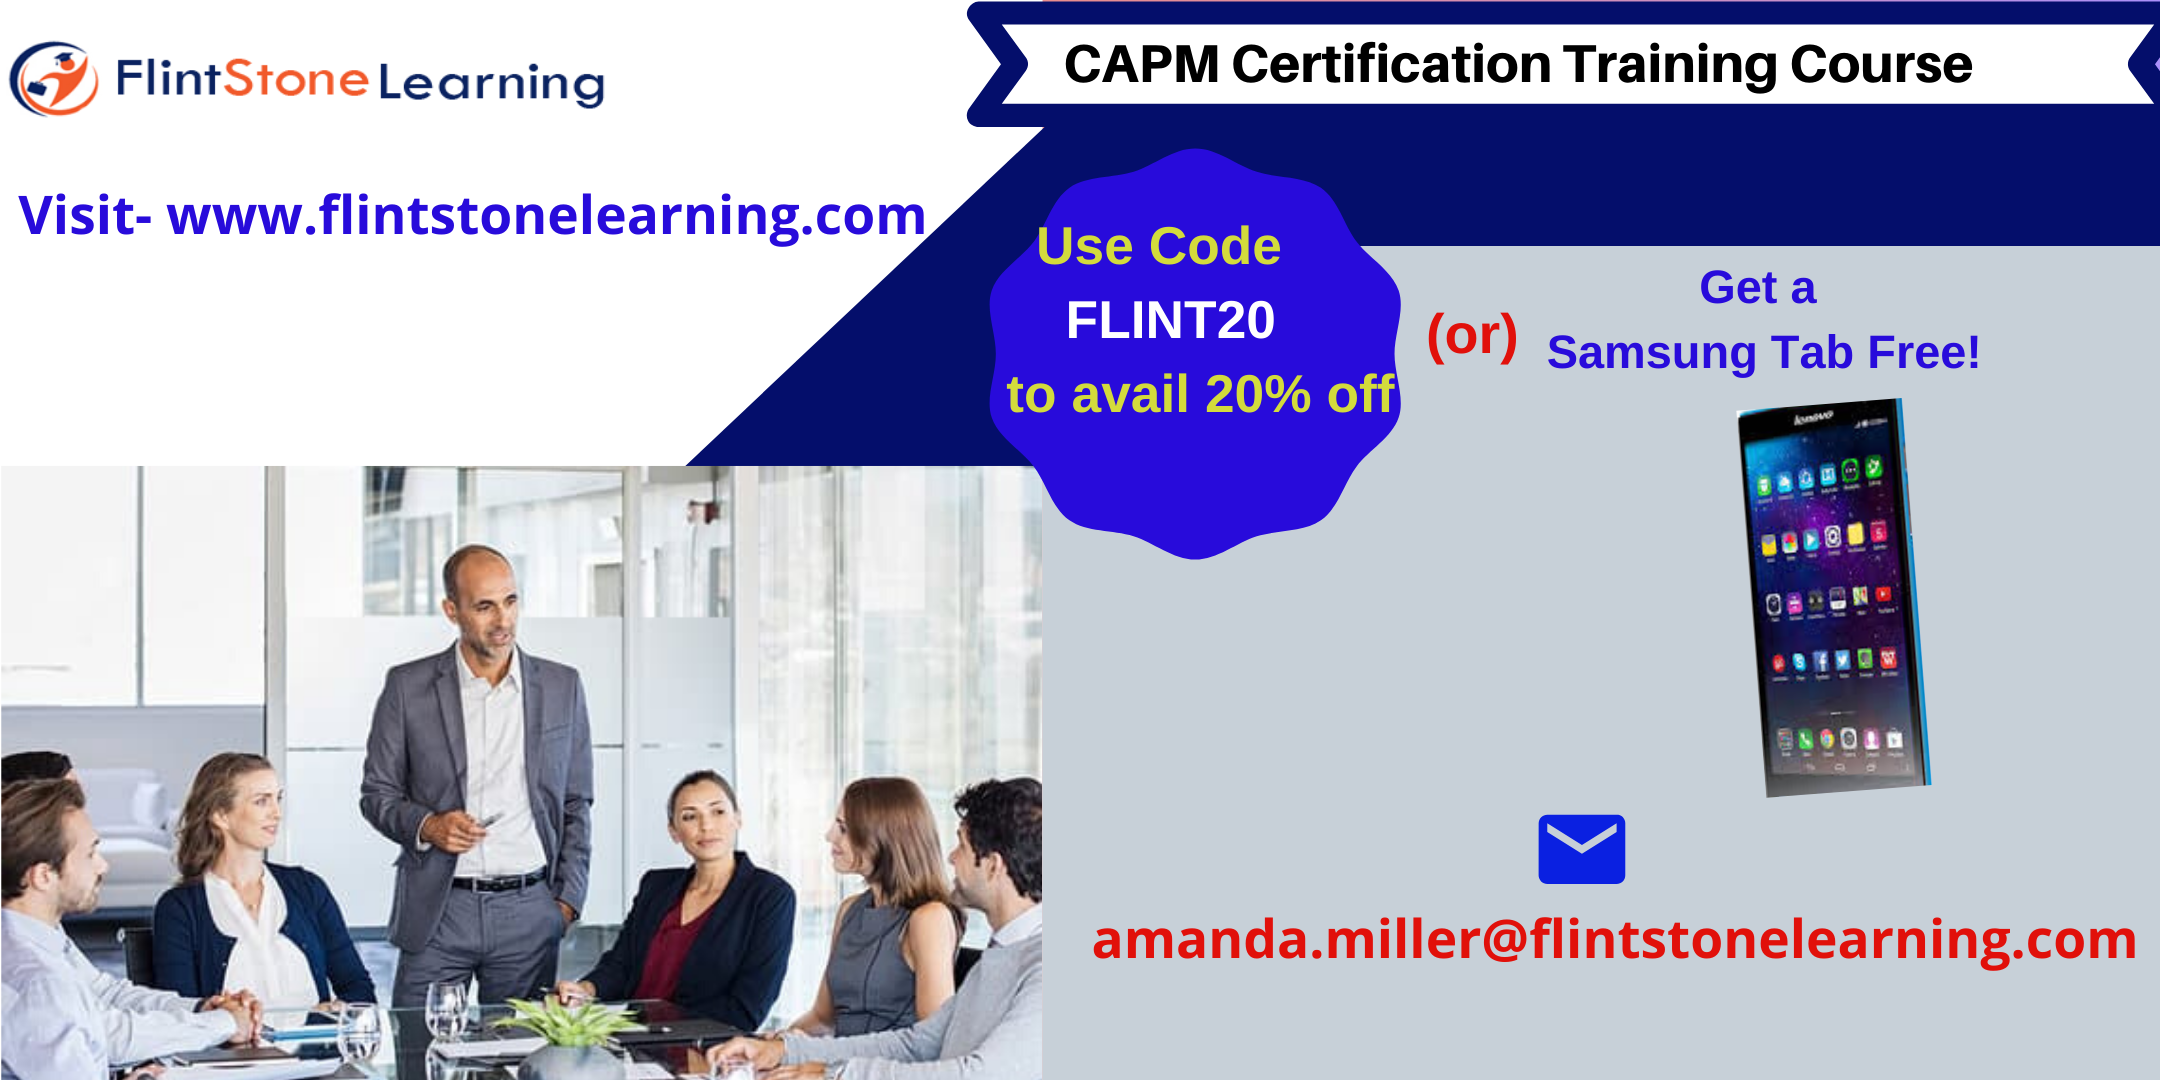 CAPM Certification Training Course in Tempe, AZ